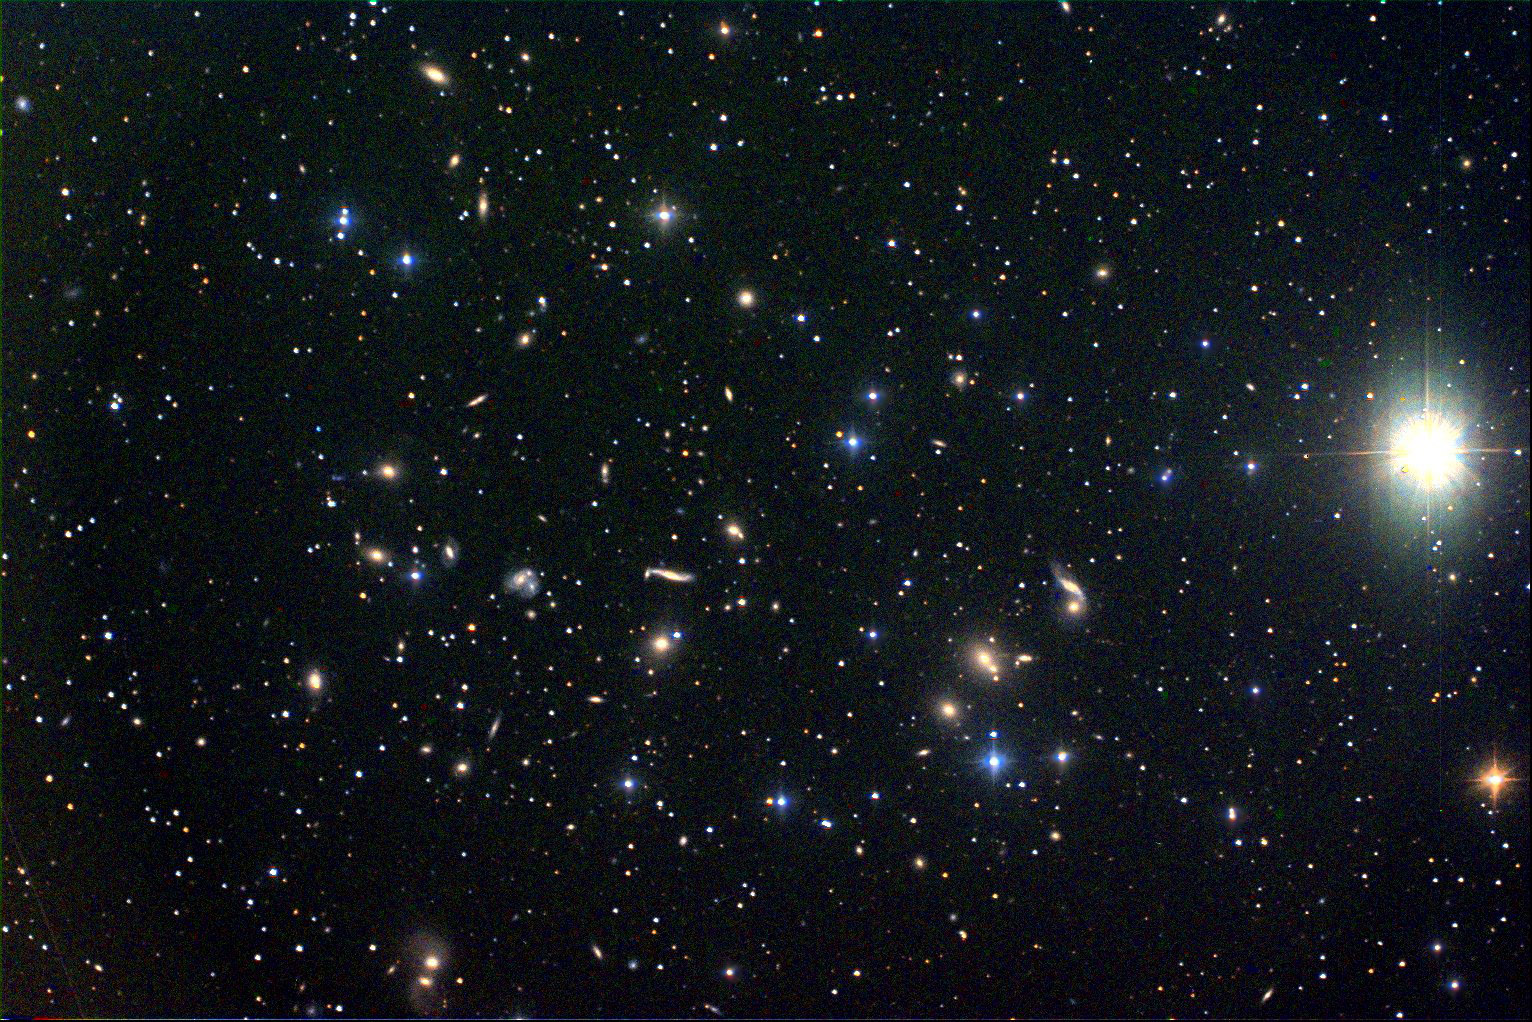 Hercules galaxy cluster